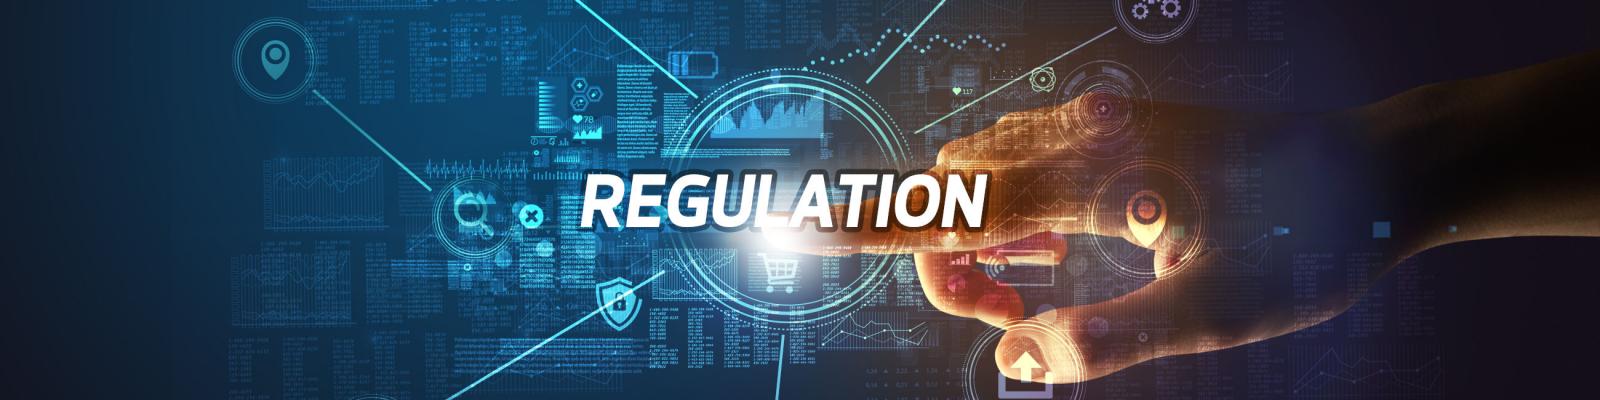 Banner image saying "Regulation"